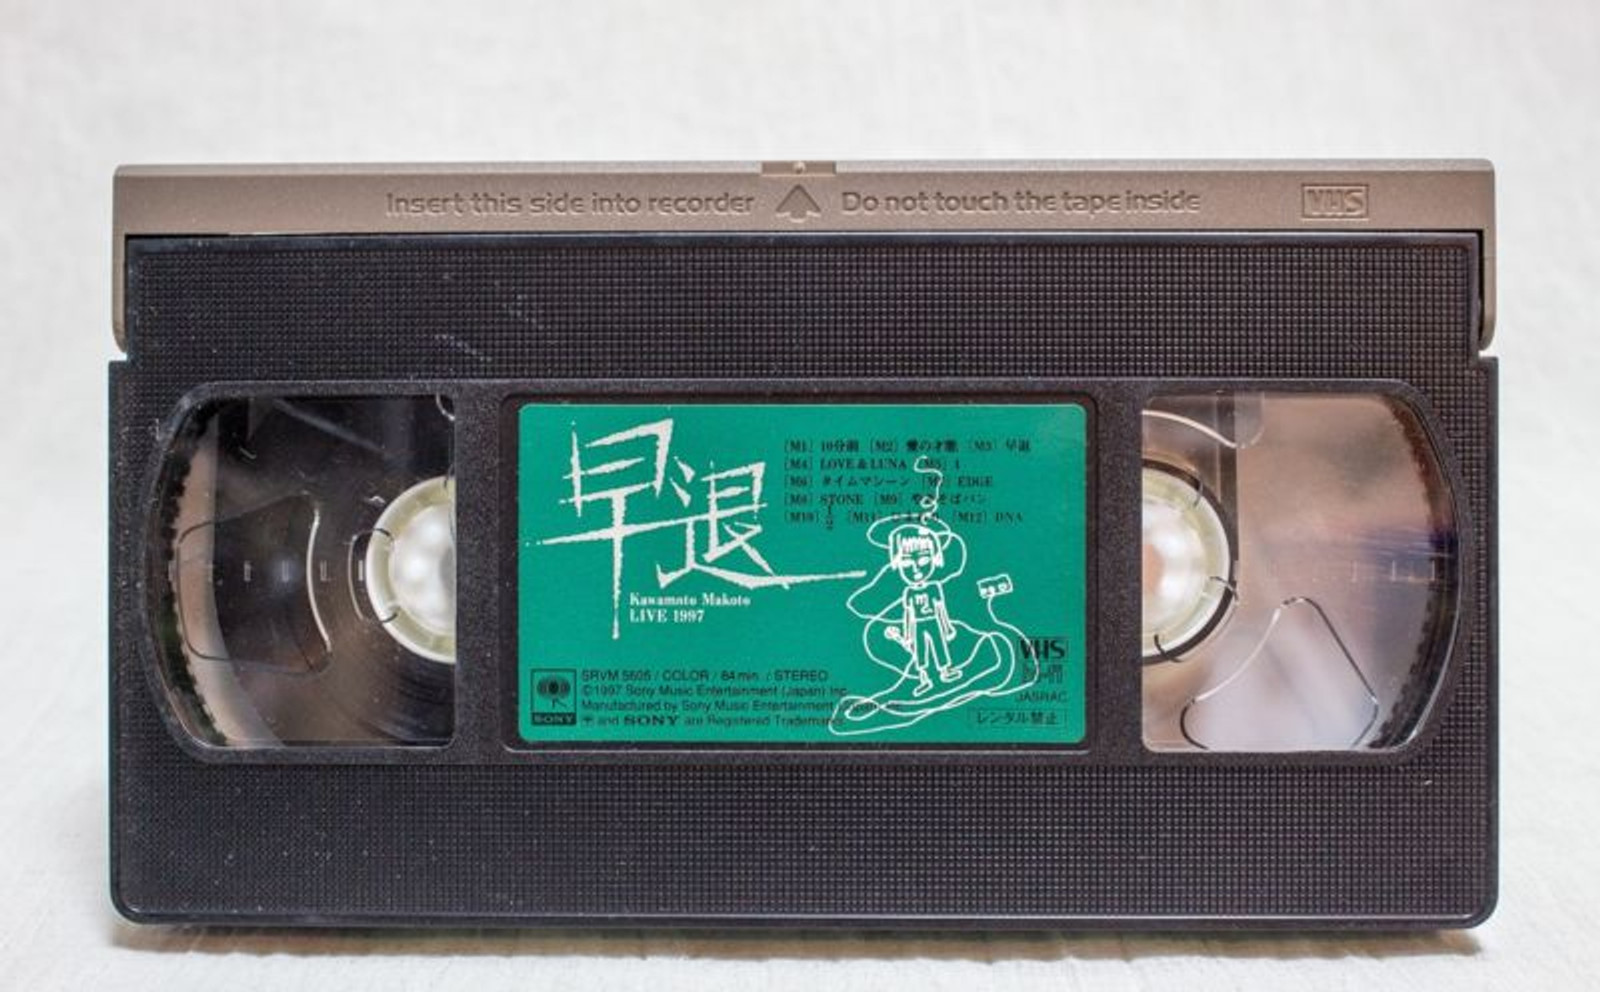 RARE!! Kawamoto Makoto VHS Video Tape SOTAI LIVE Concert 1997 JAPAN